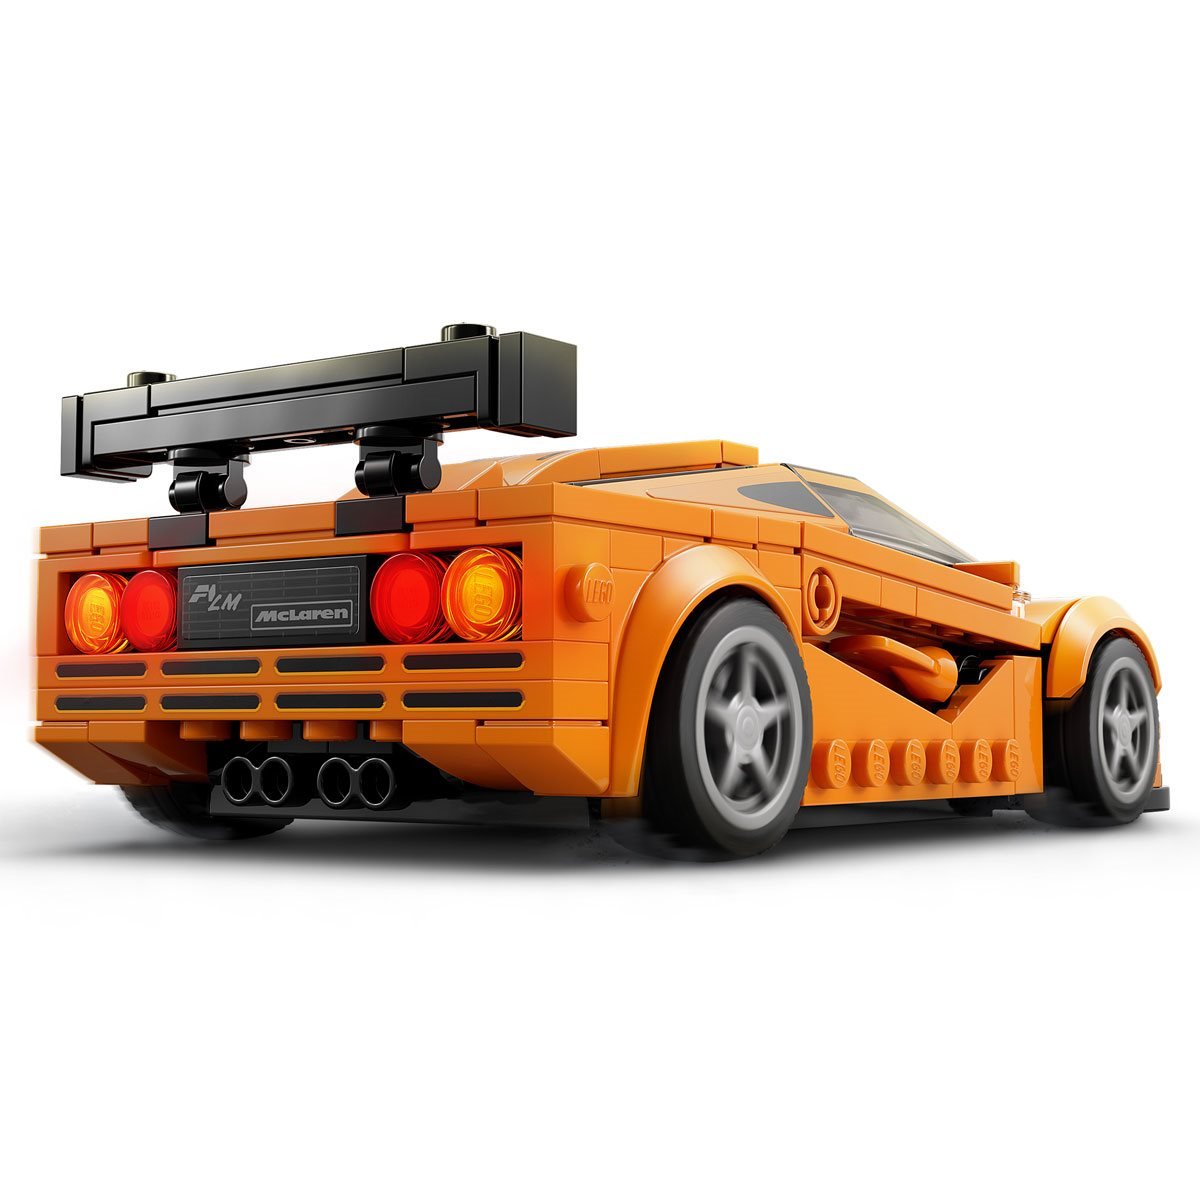 LEGO® kits LEGO® Speed Champions 76918 McLaren Solus GT & McLaren